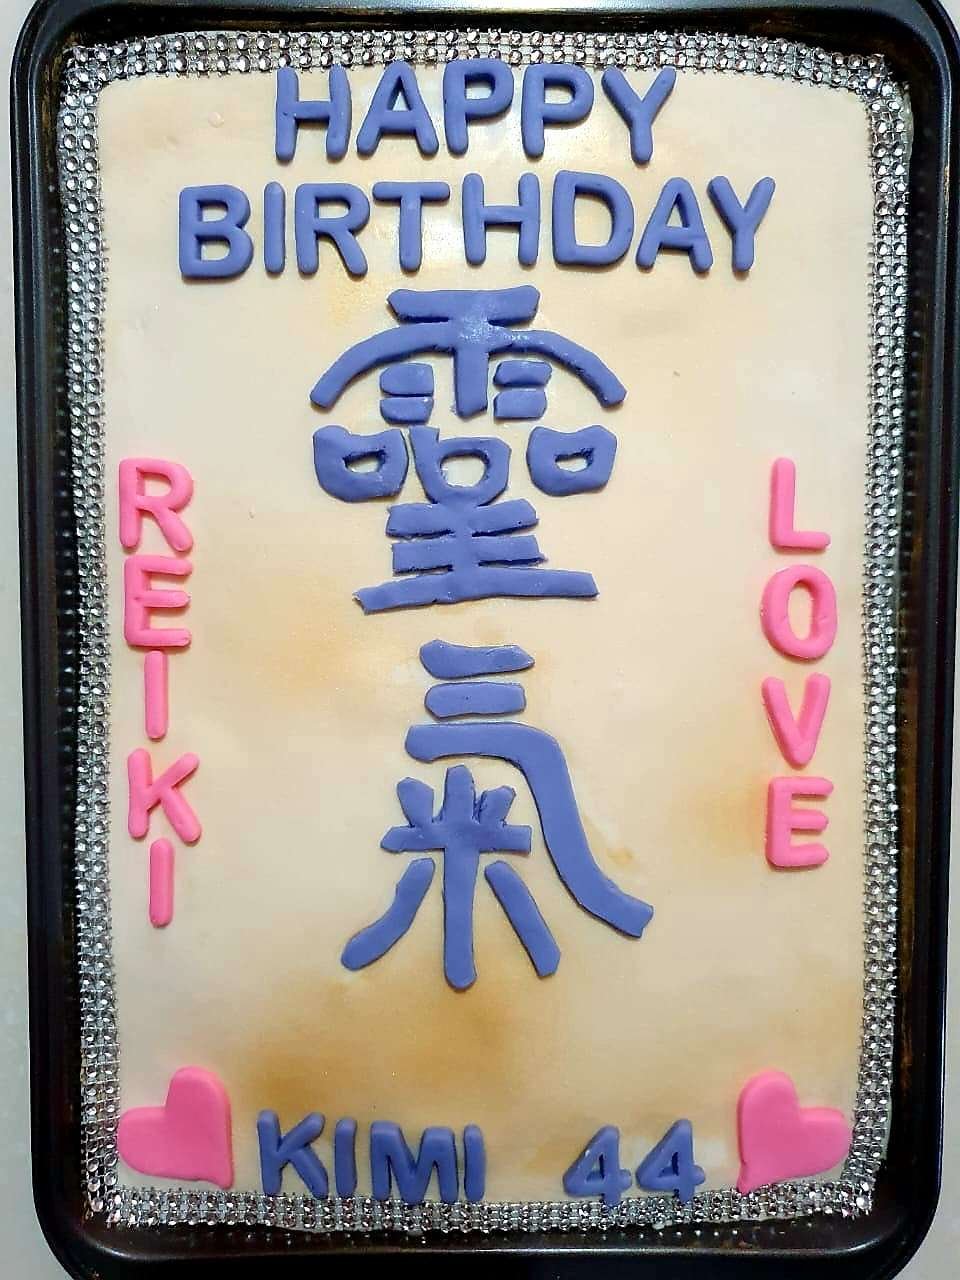 using-reiki-symbols-reiki-birthday-cake